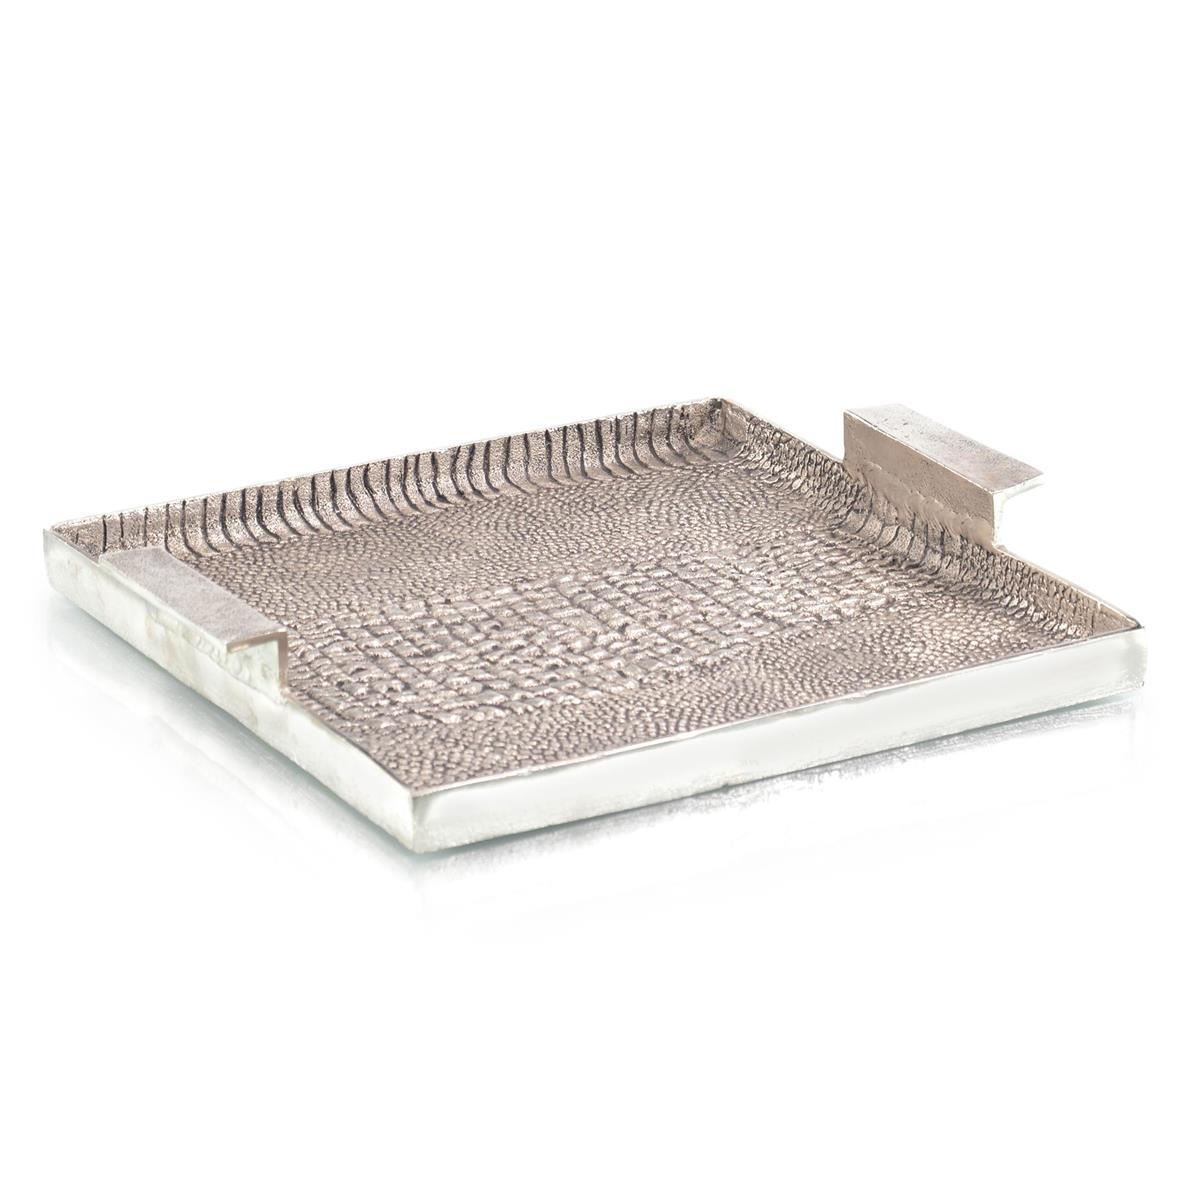 Alligator Textured Aluminum Tray II-John Richard-Trays-Artistic Elements